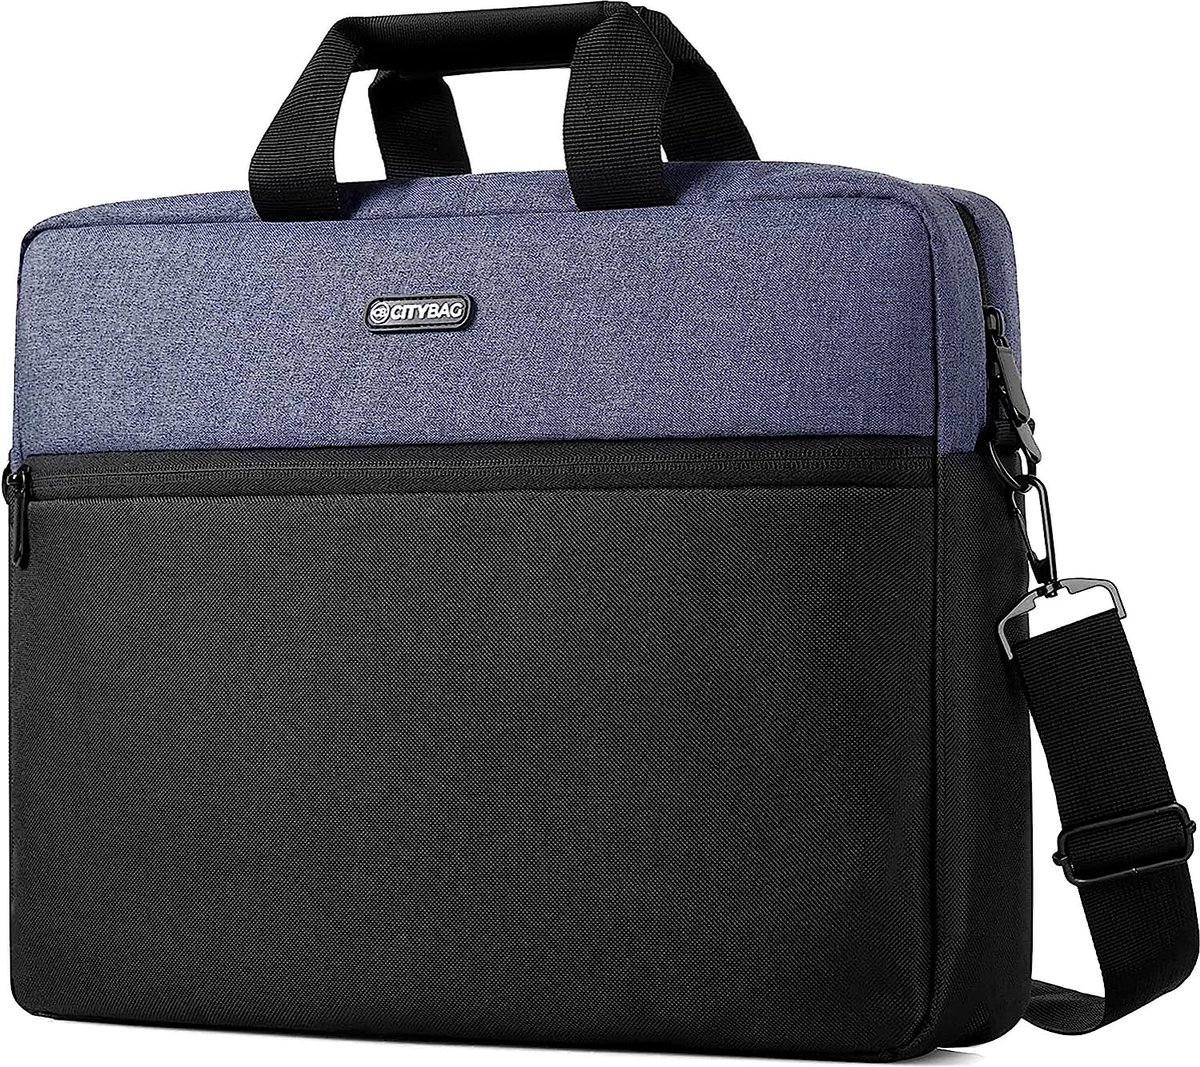 CITY BAG® ProX Laptoptas - 15.6 inch - Laptop Tas Universeel - Blauw